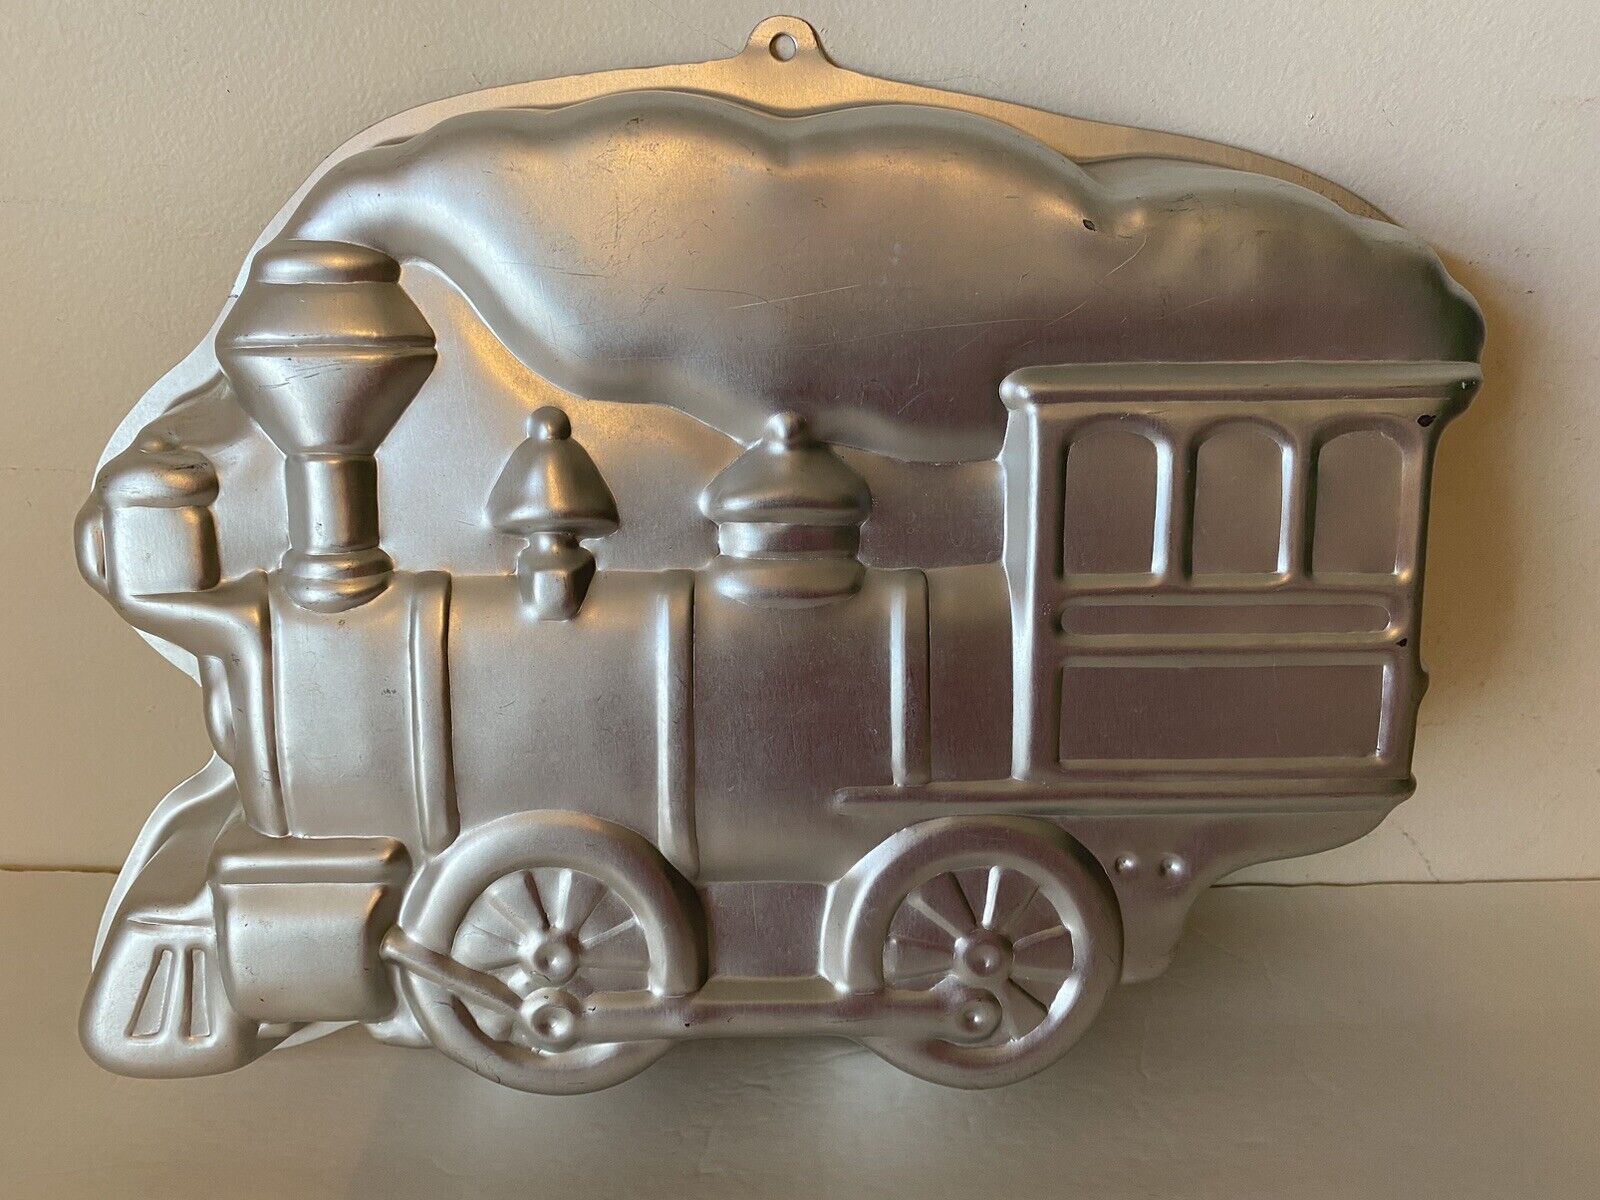 Vintage Wilton Steam Engine Train Cake Pan 1983 13.5” long 2” deep